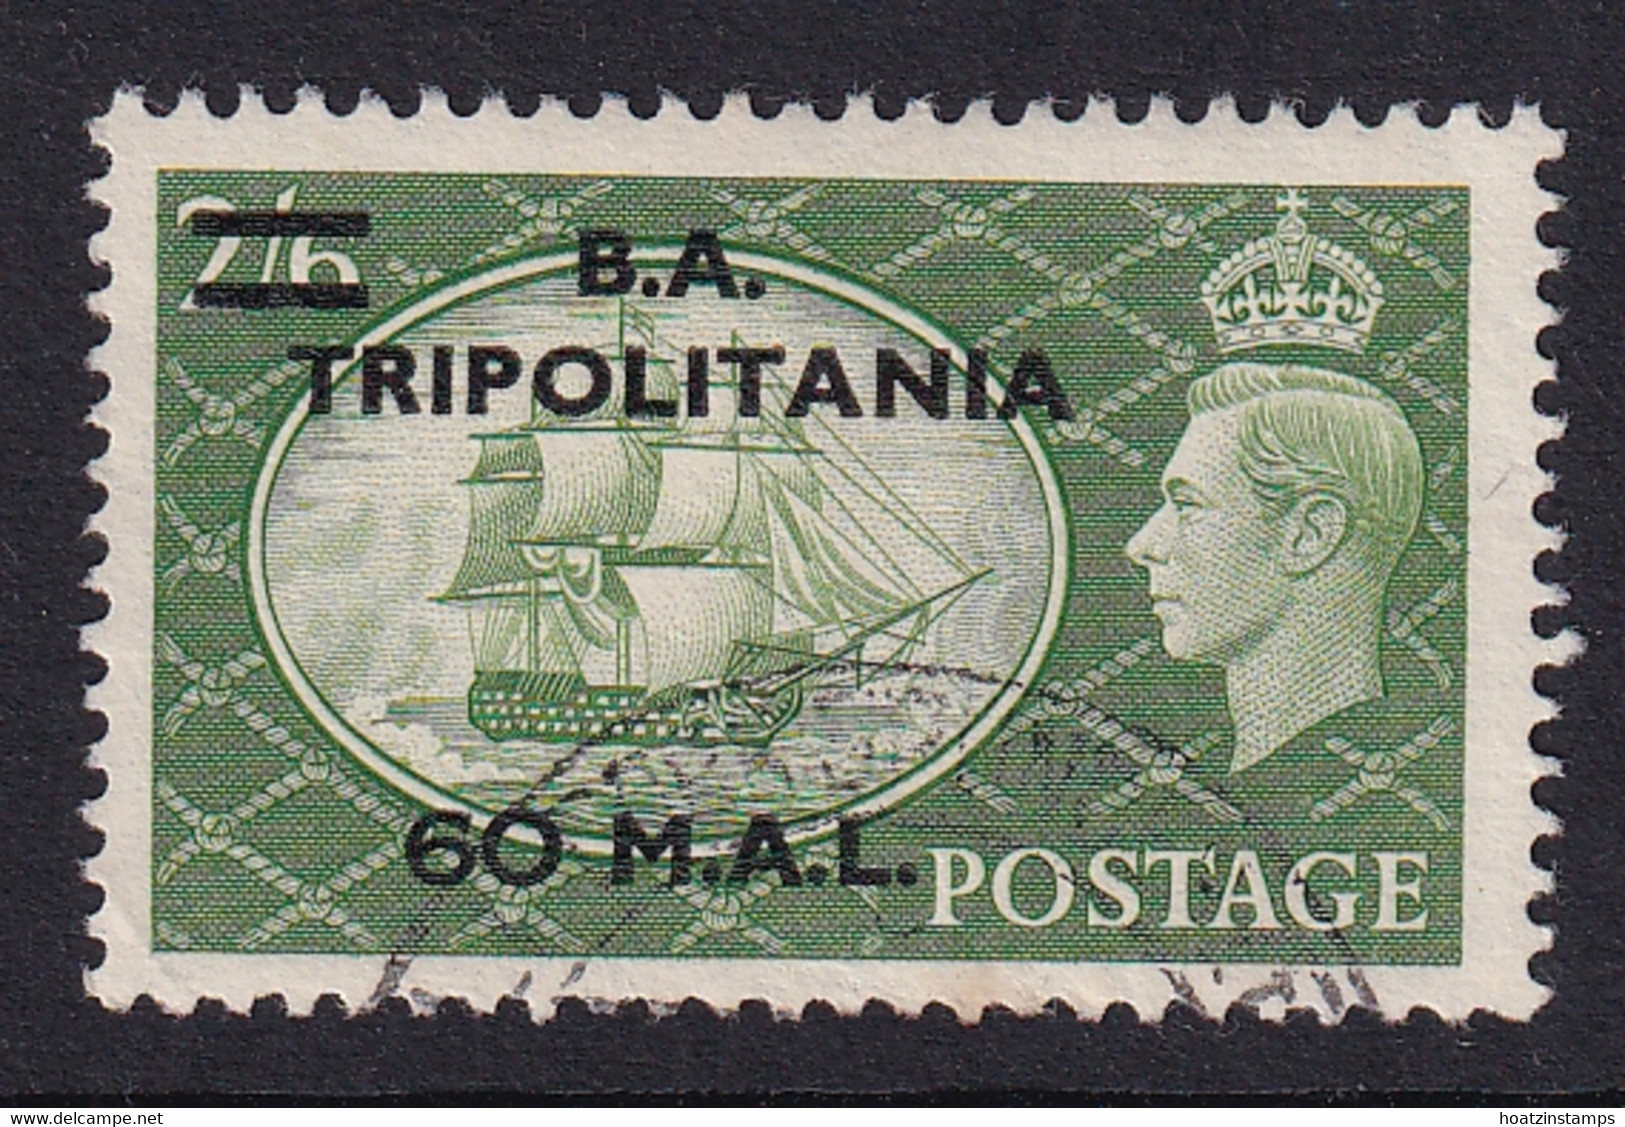 Tripolitania: 1951   KGVI 'B. A. Tripolitania' OVPT   SG T32    60l On 2/6d    Used - Tripolitaine